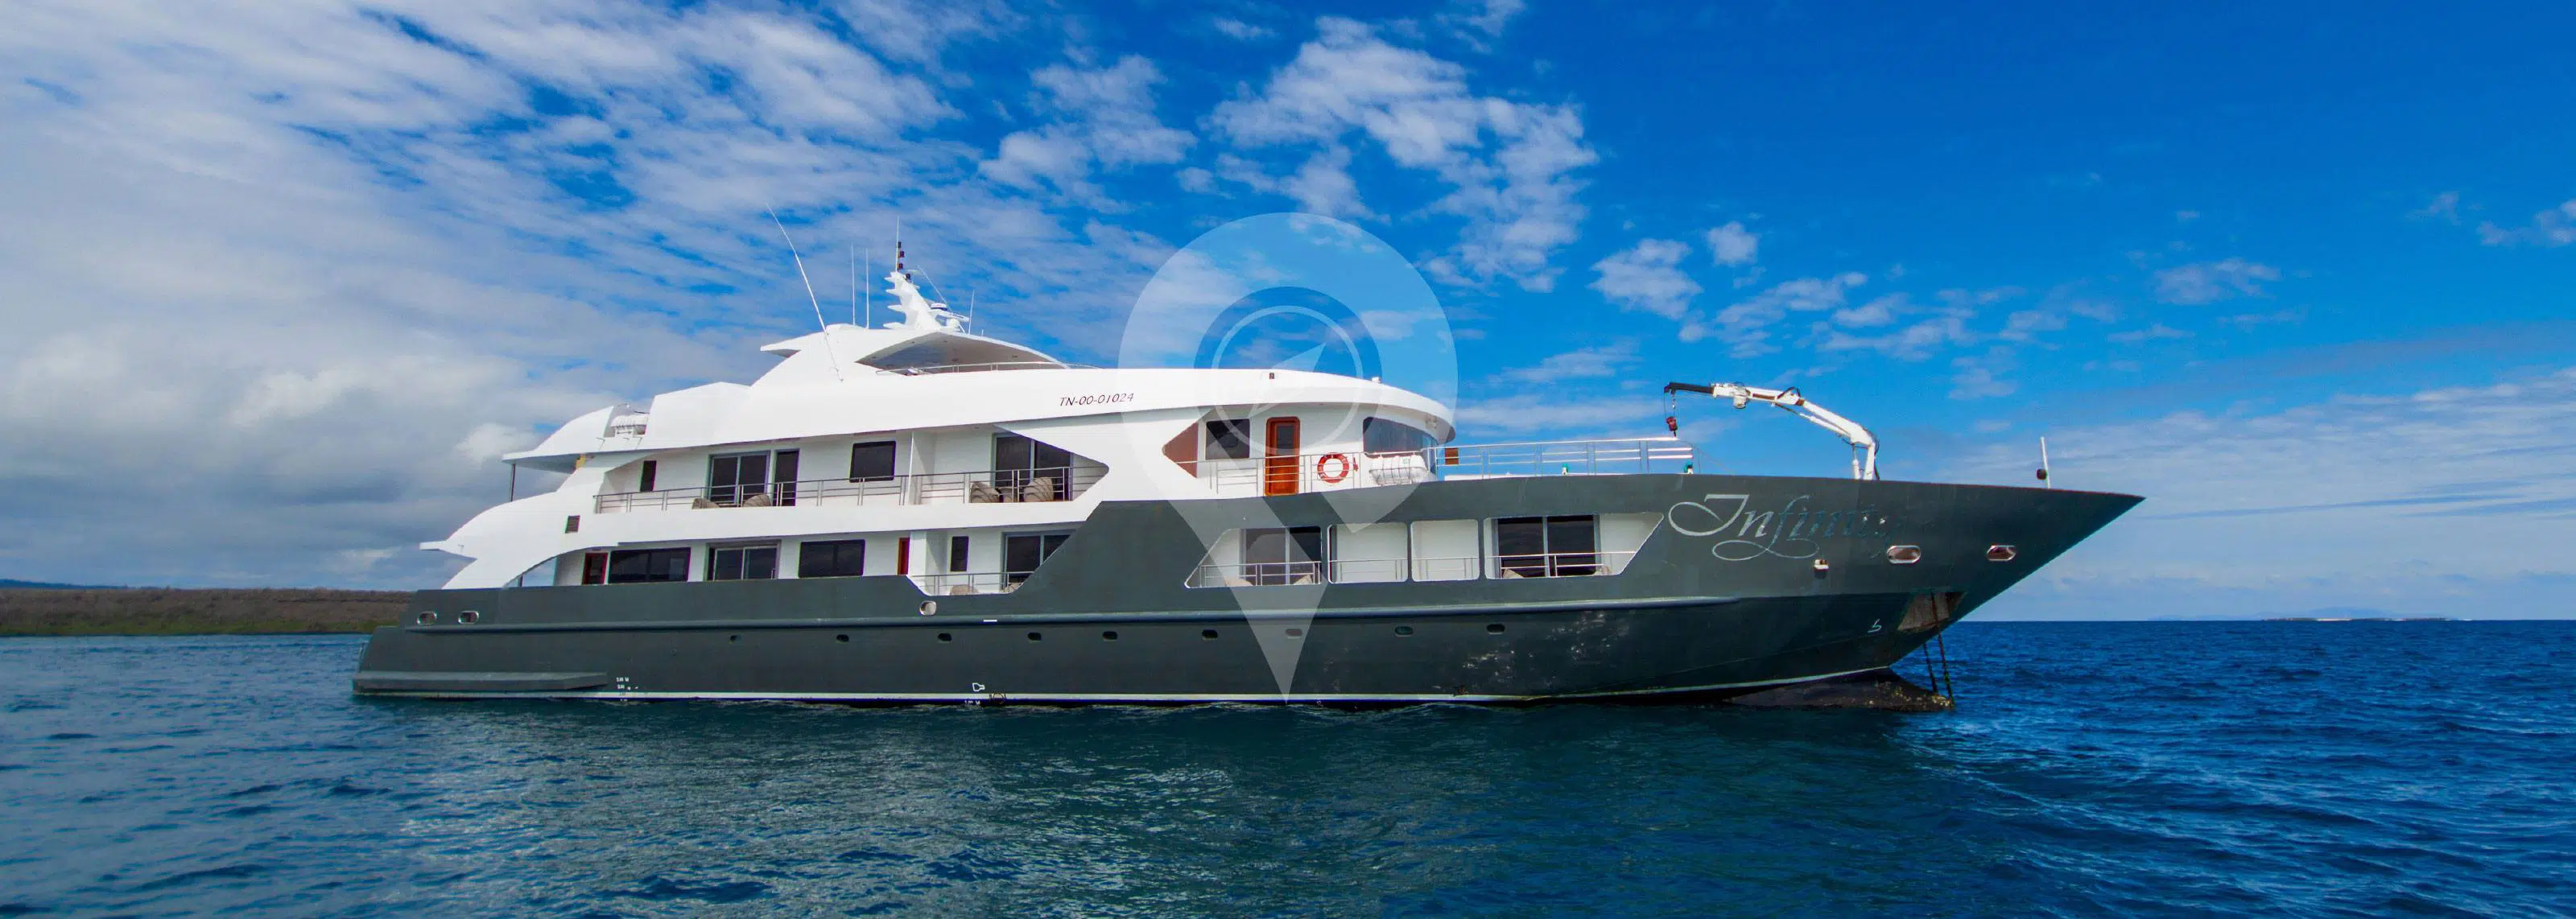 Infinity Galapagos Yacht